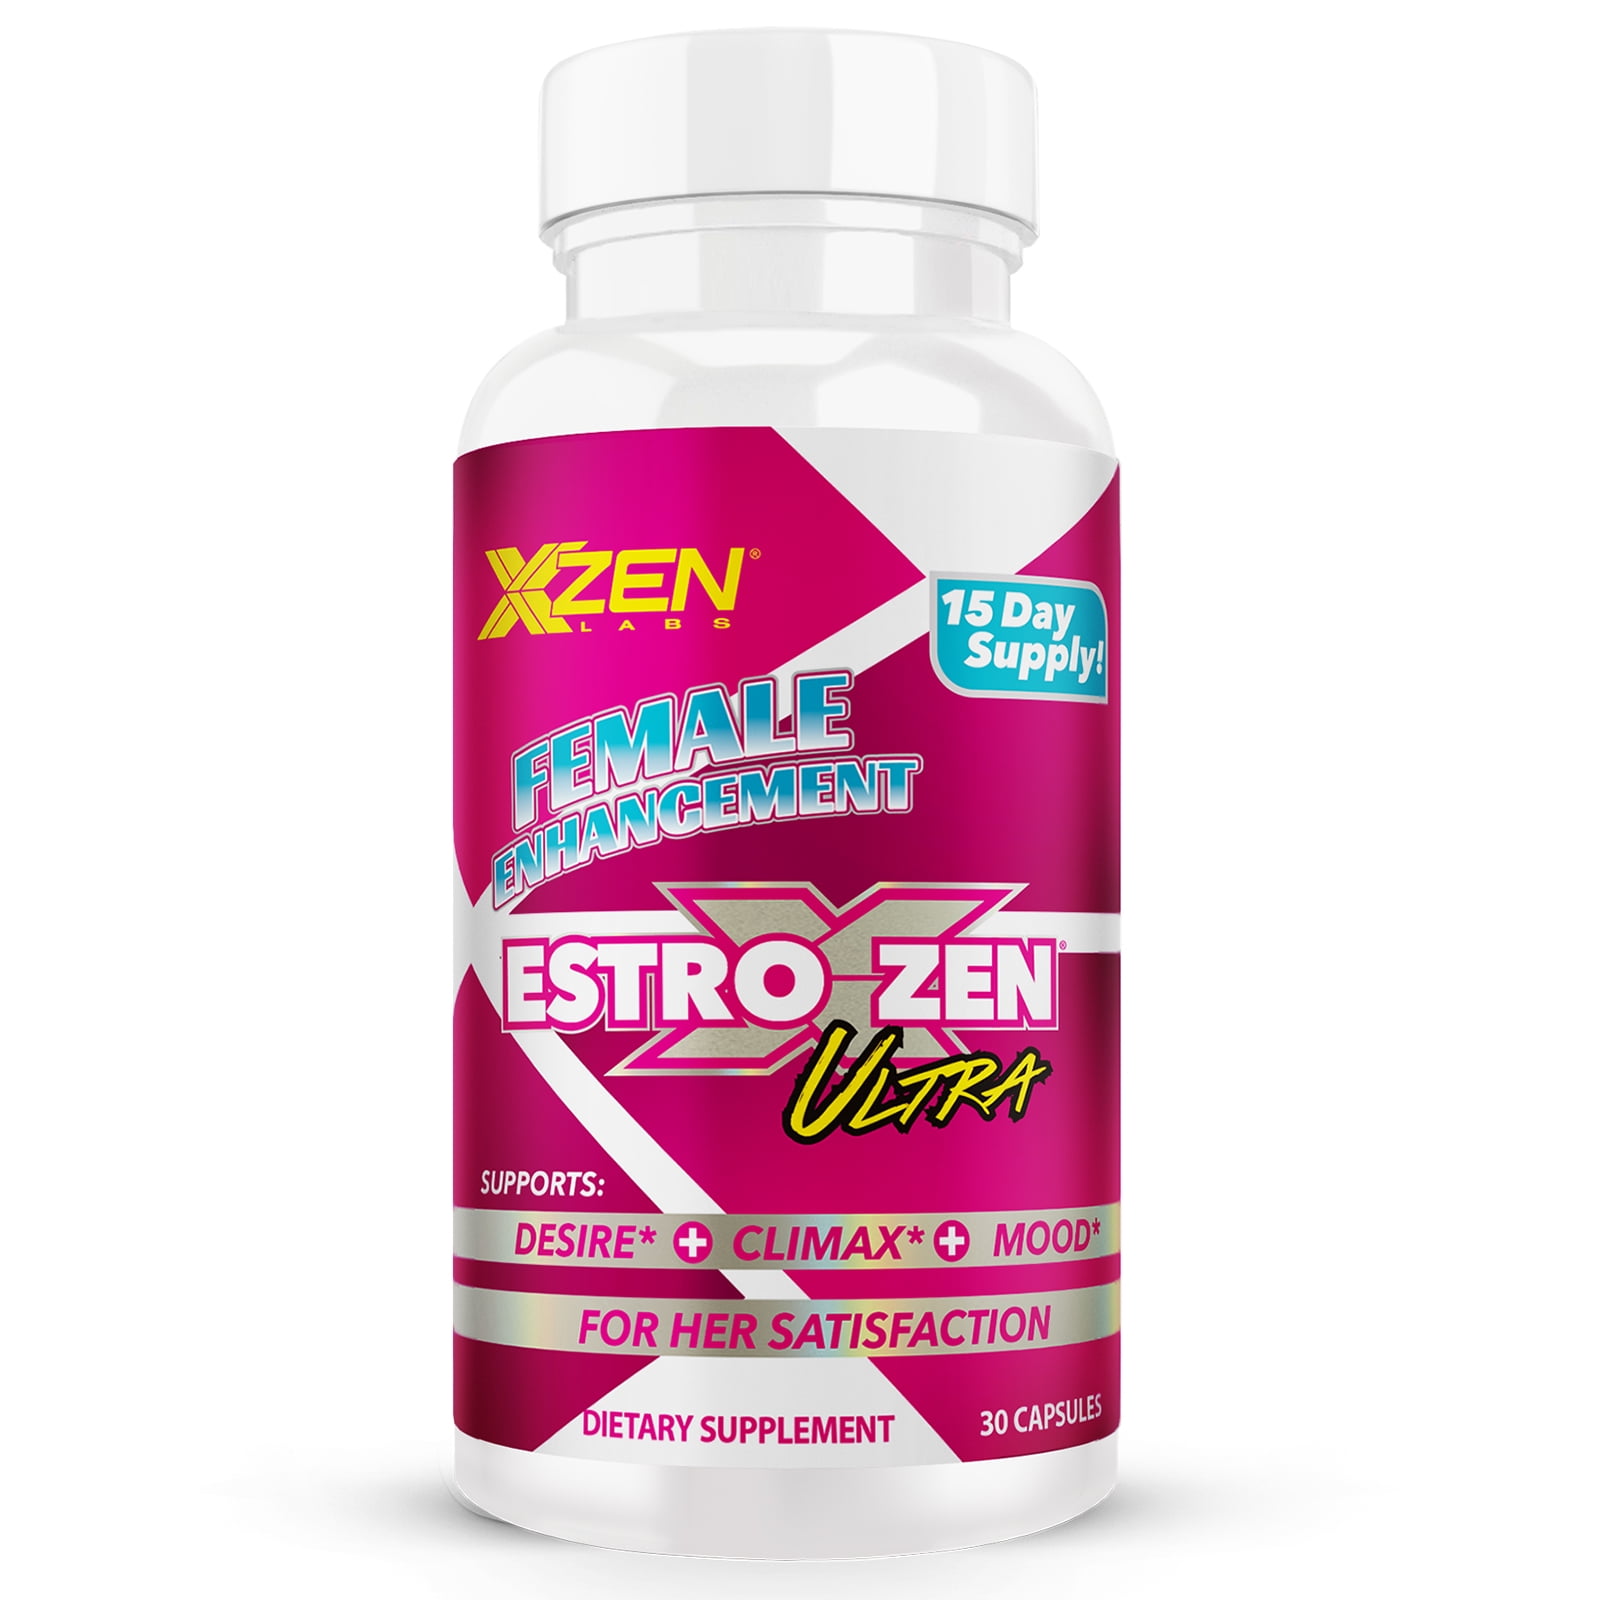 XZEN Estroxzen Ultra Female Enhancement Supplement Libido, Desire, Sex Pills for Women 30 Capsules